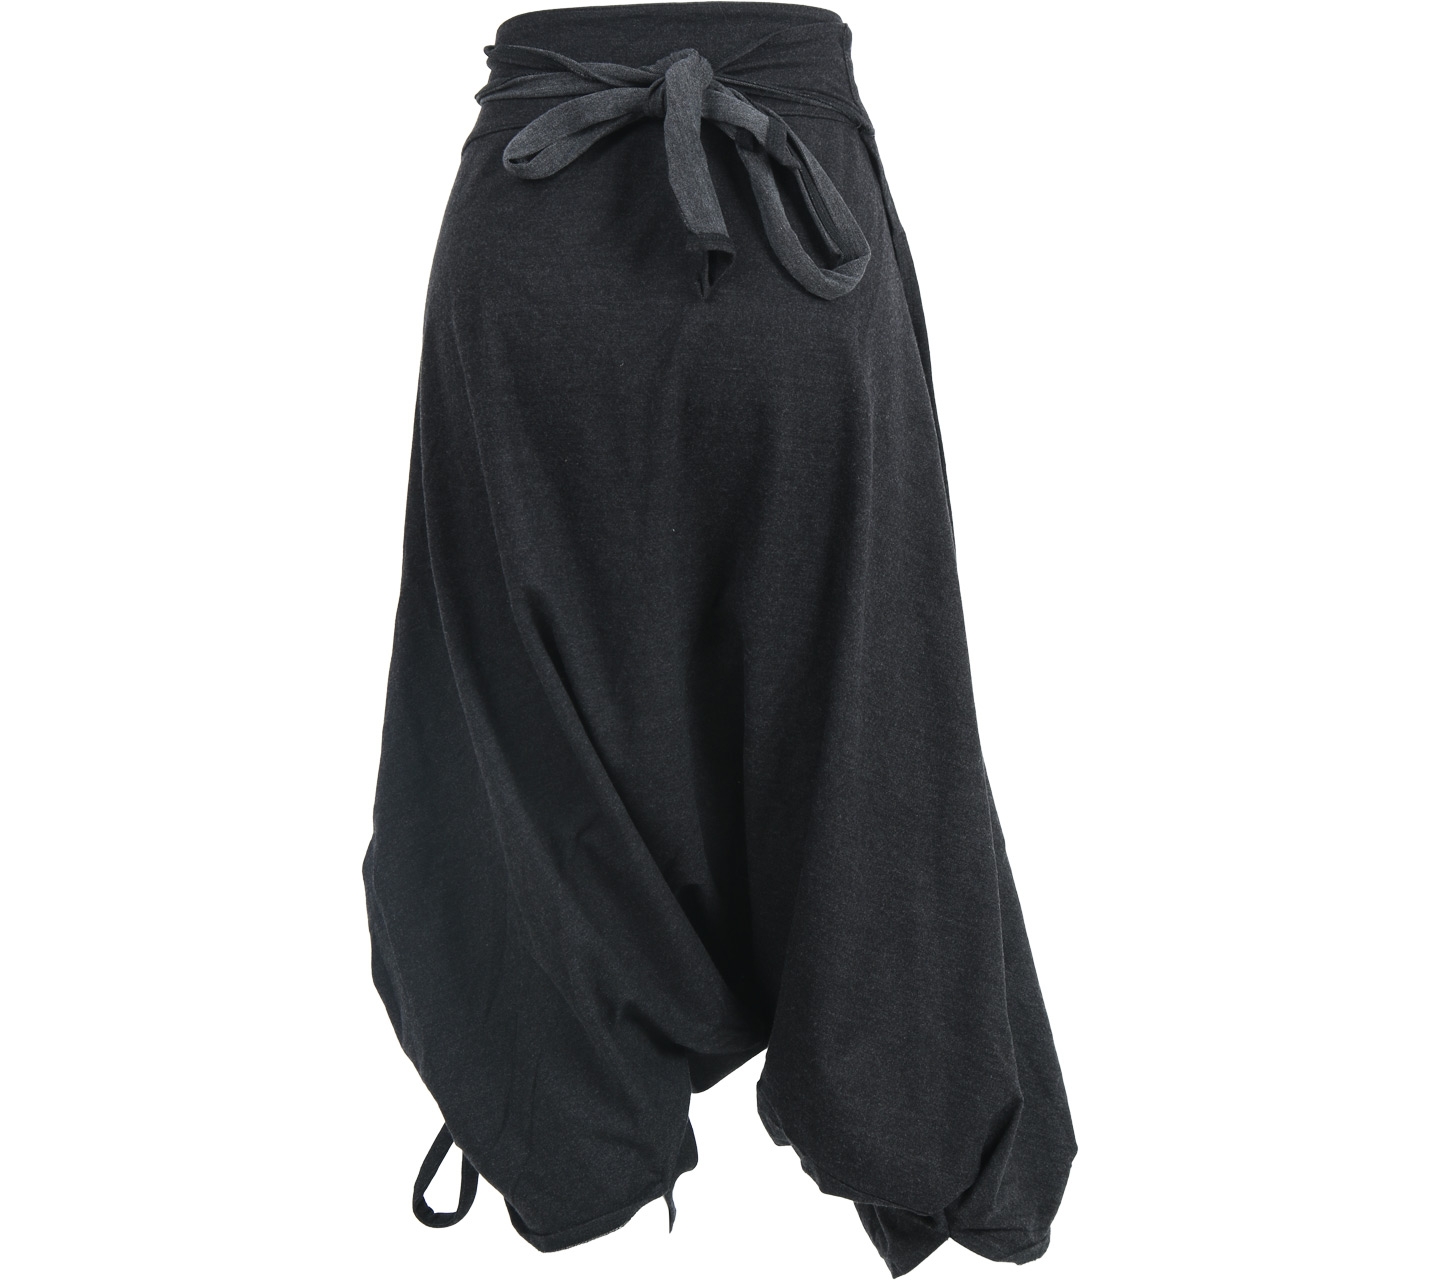 Soep Shop Black Culottes Pants